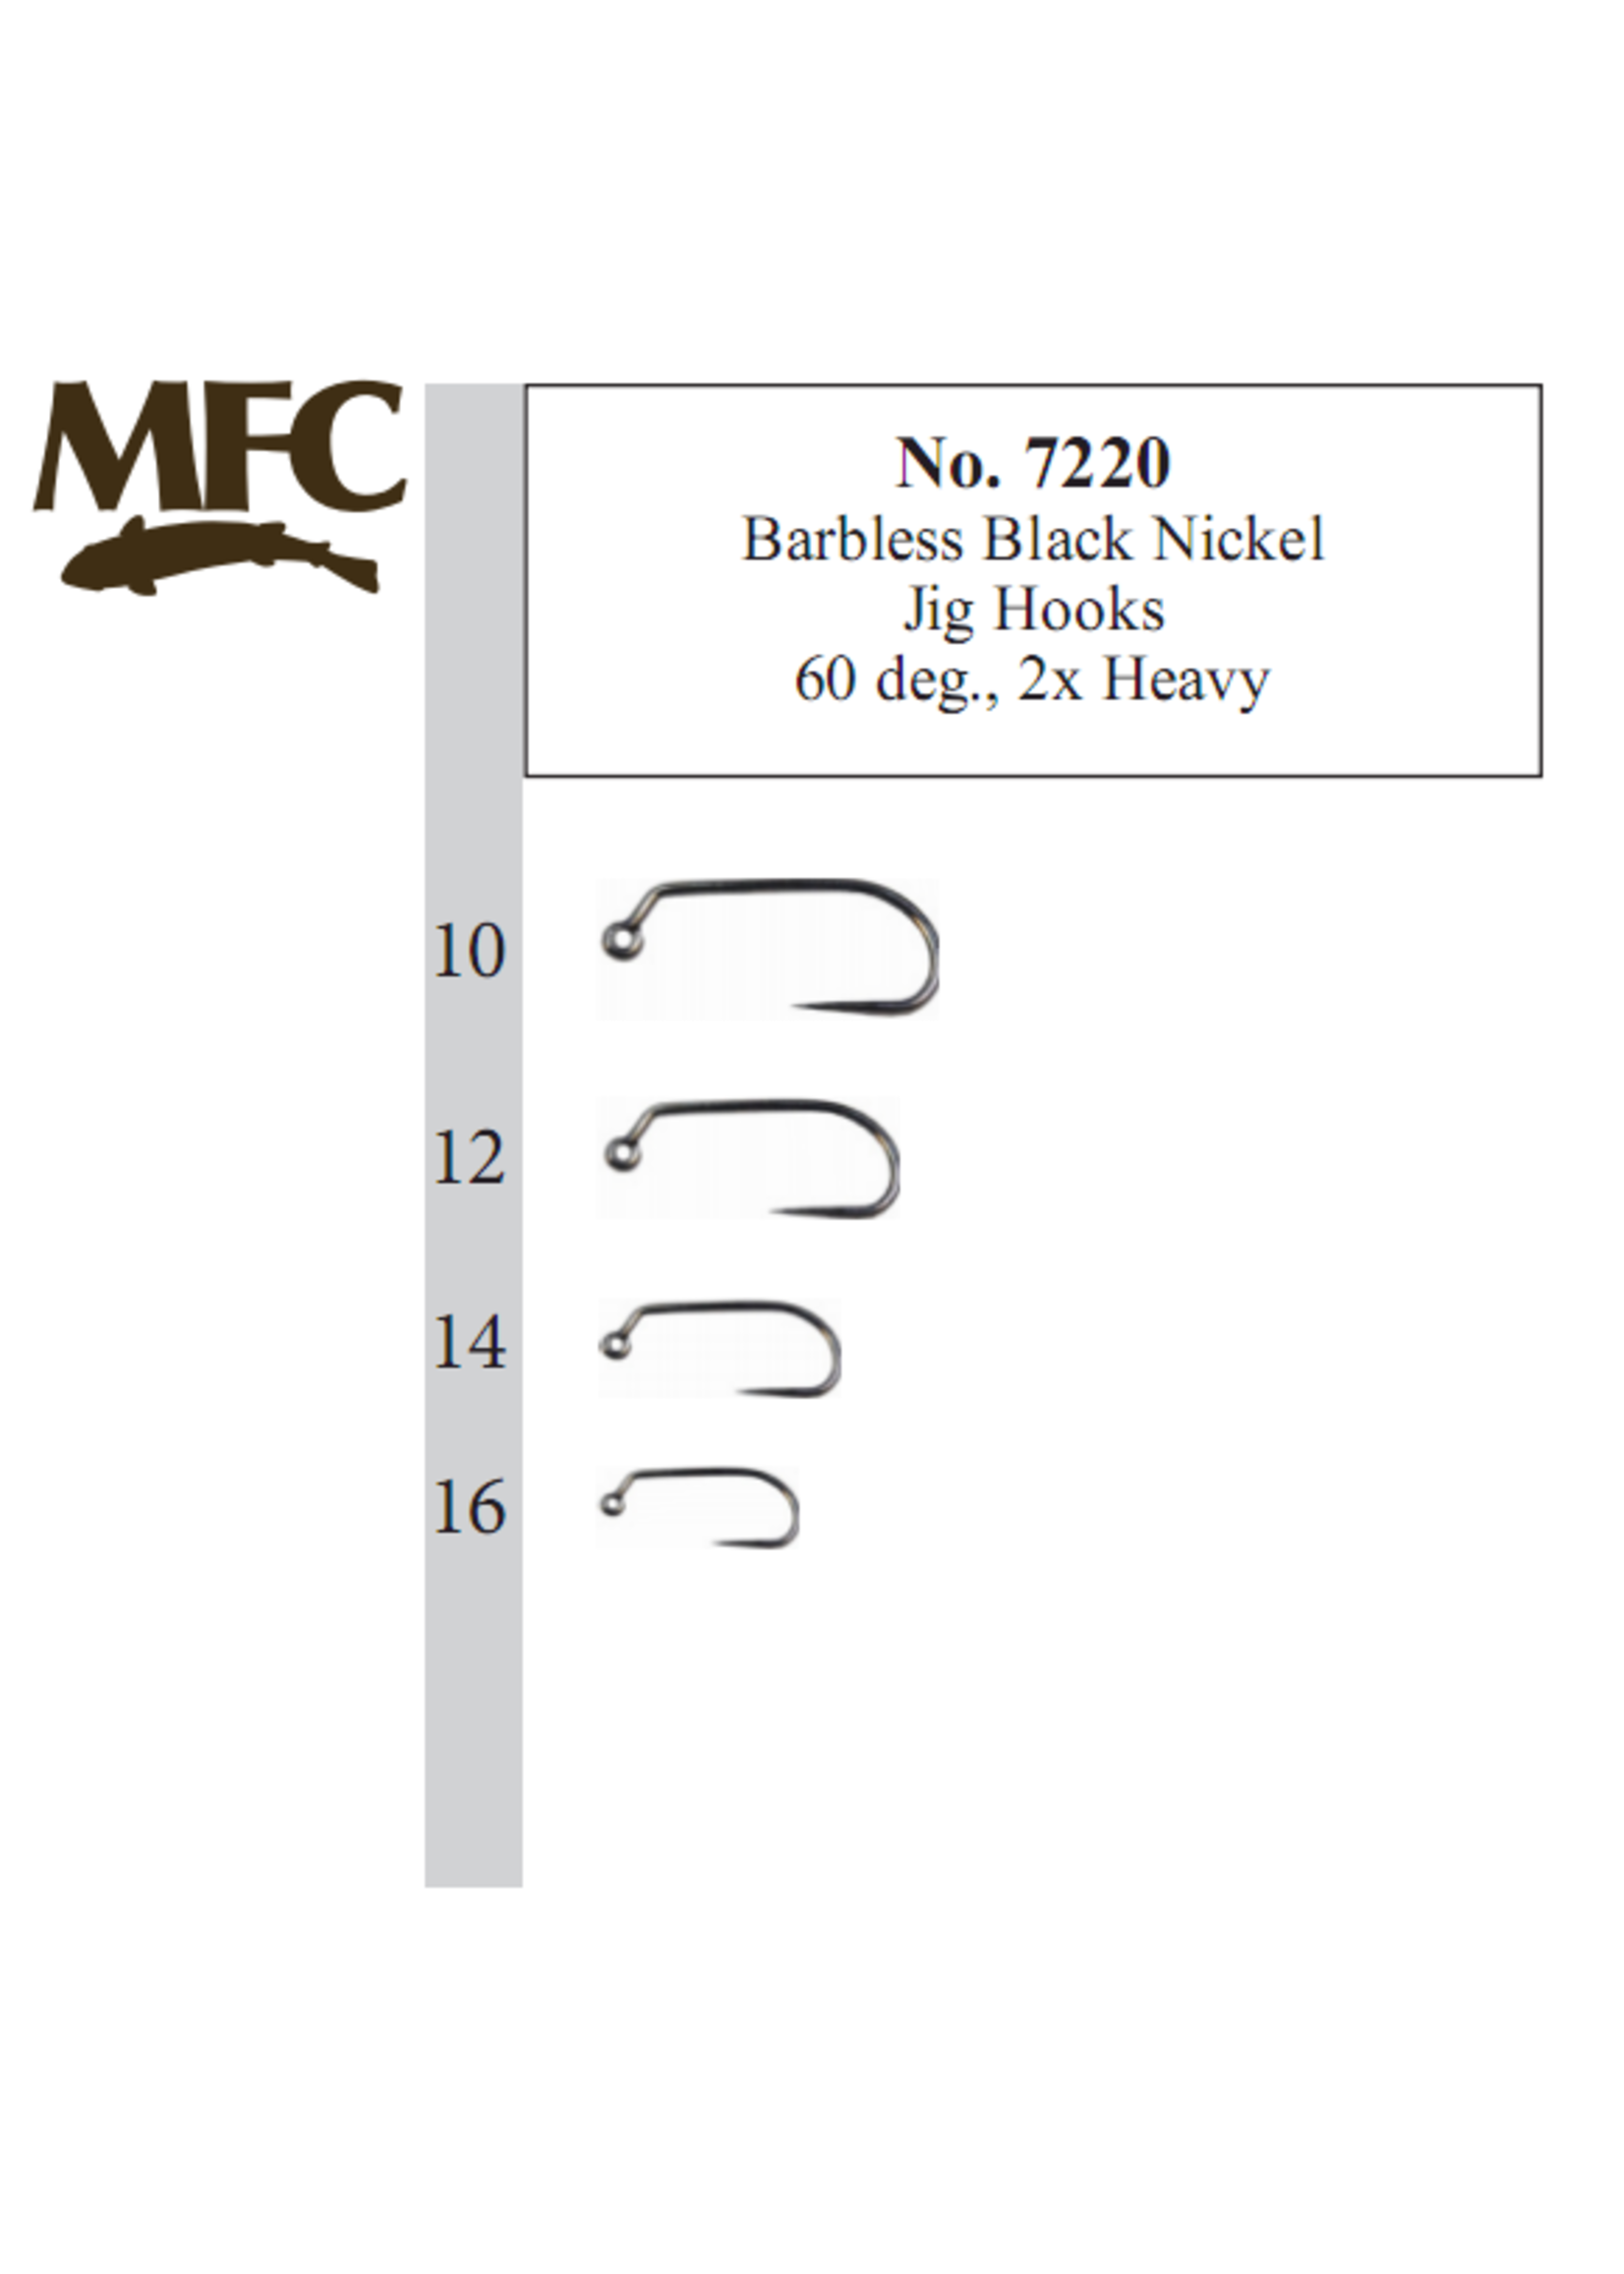 Montana Fly Company MFC Barbless Jig Hook 60 degree Black Nickel